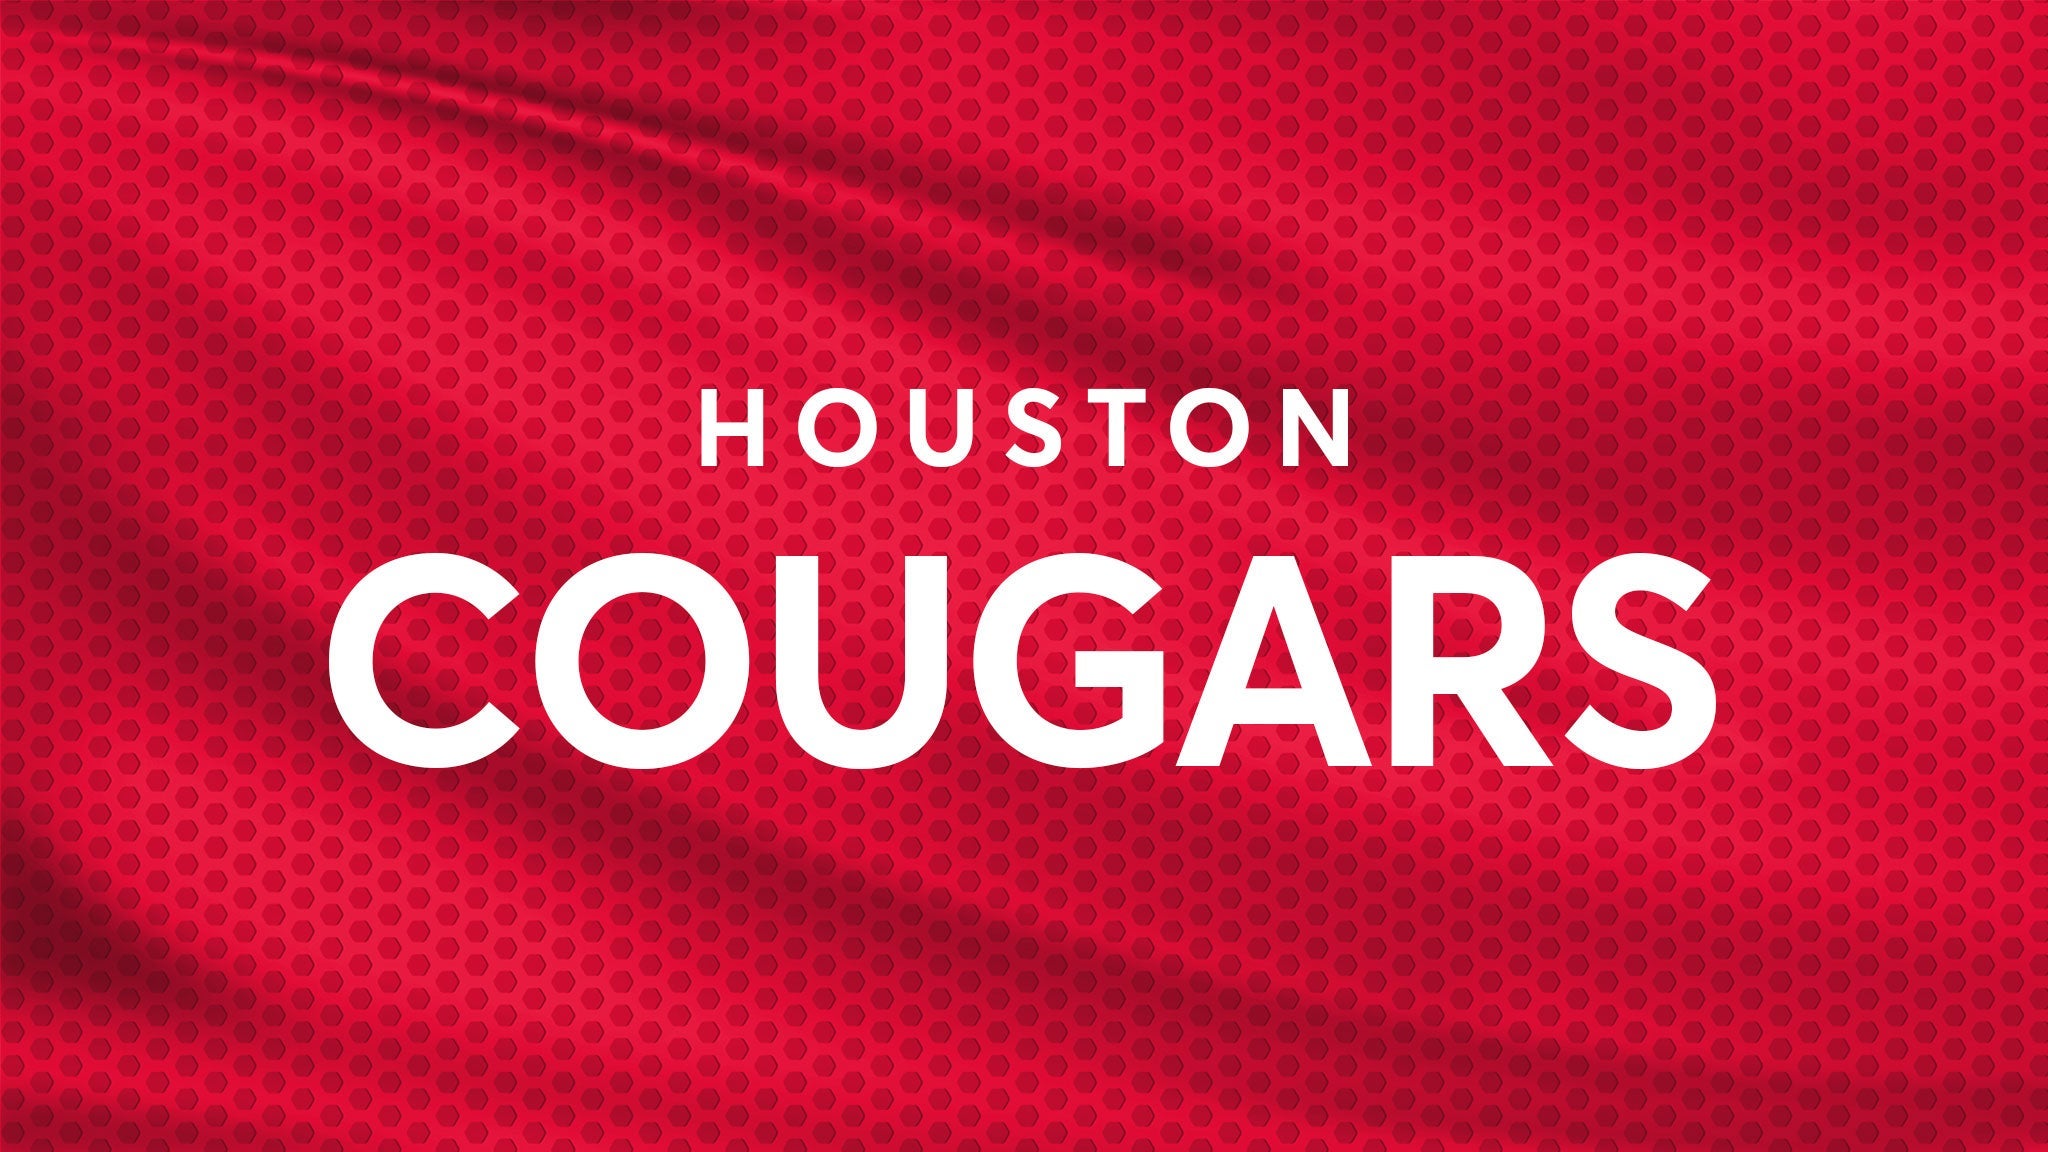 Houston Cougars Football vs. Iowa State Cyclones Football hero